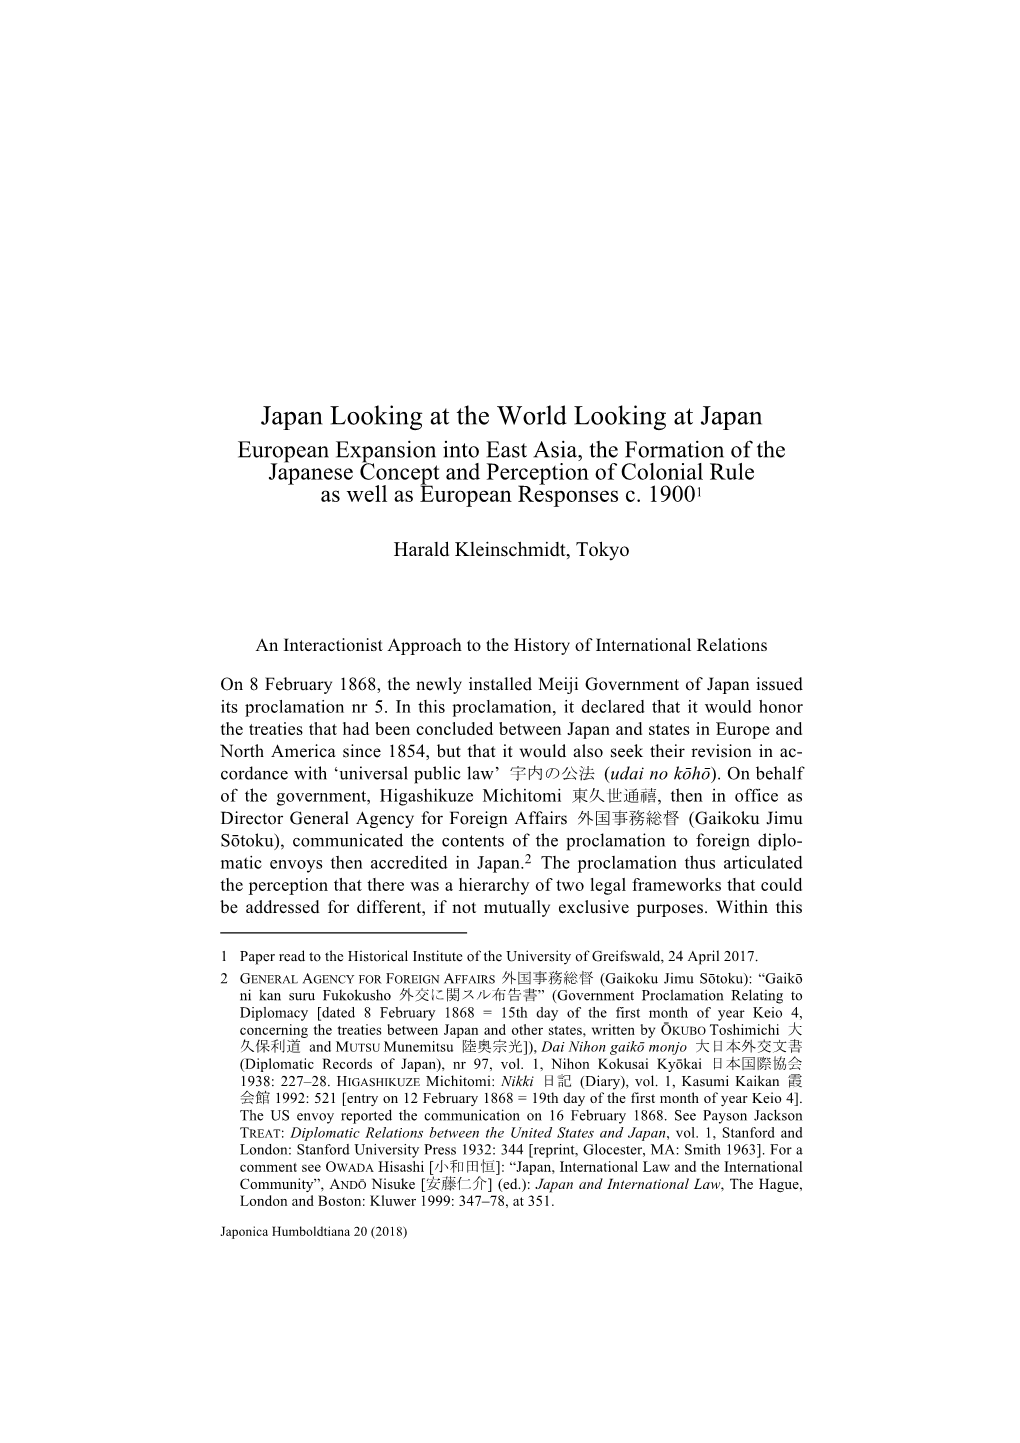 Japan Looking at the World Looking at Japan : European Expansion Into